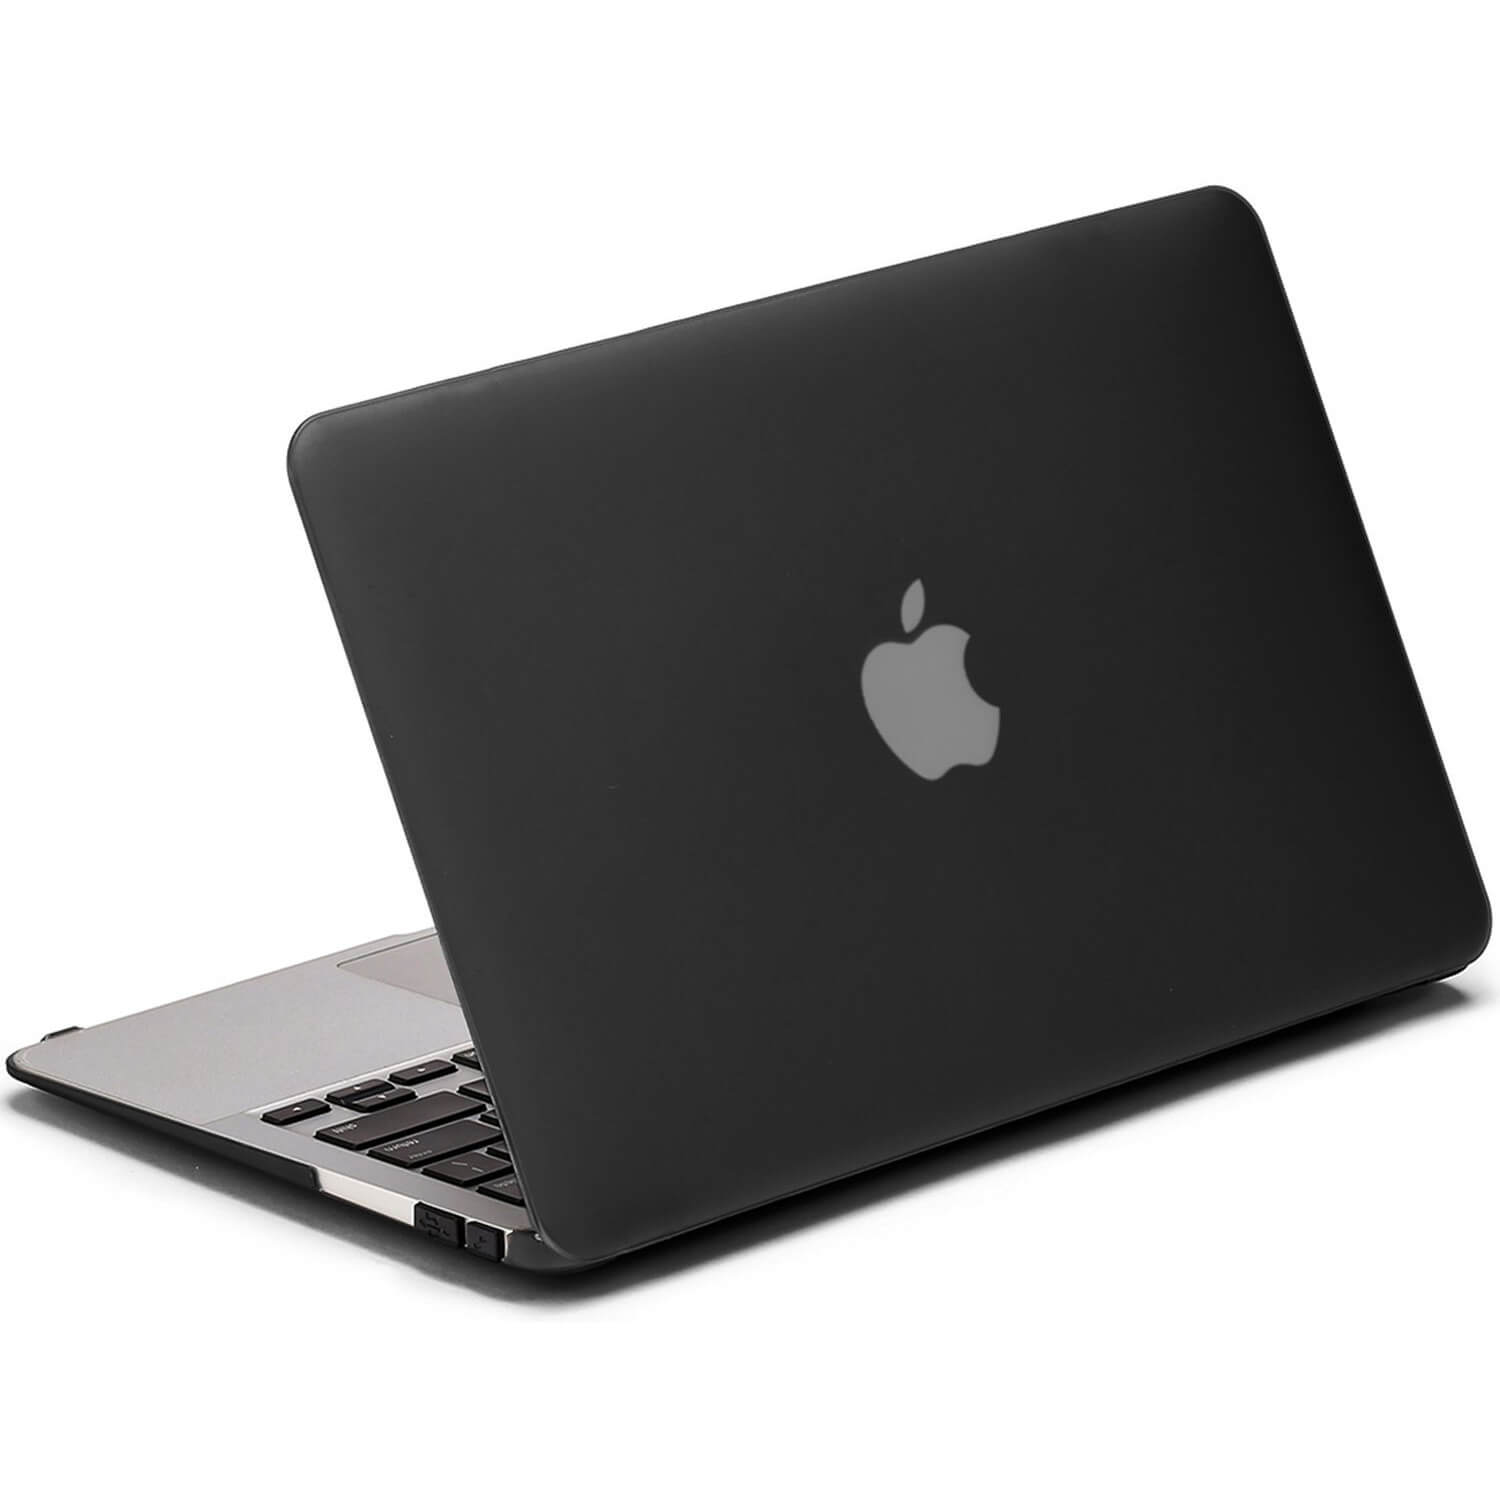  Carcasa de protectie Lention PCC-PRO13-BLK pentru Macbook Pro 13 inch, Negru 